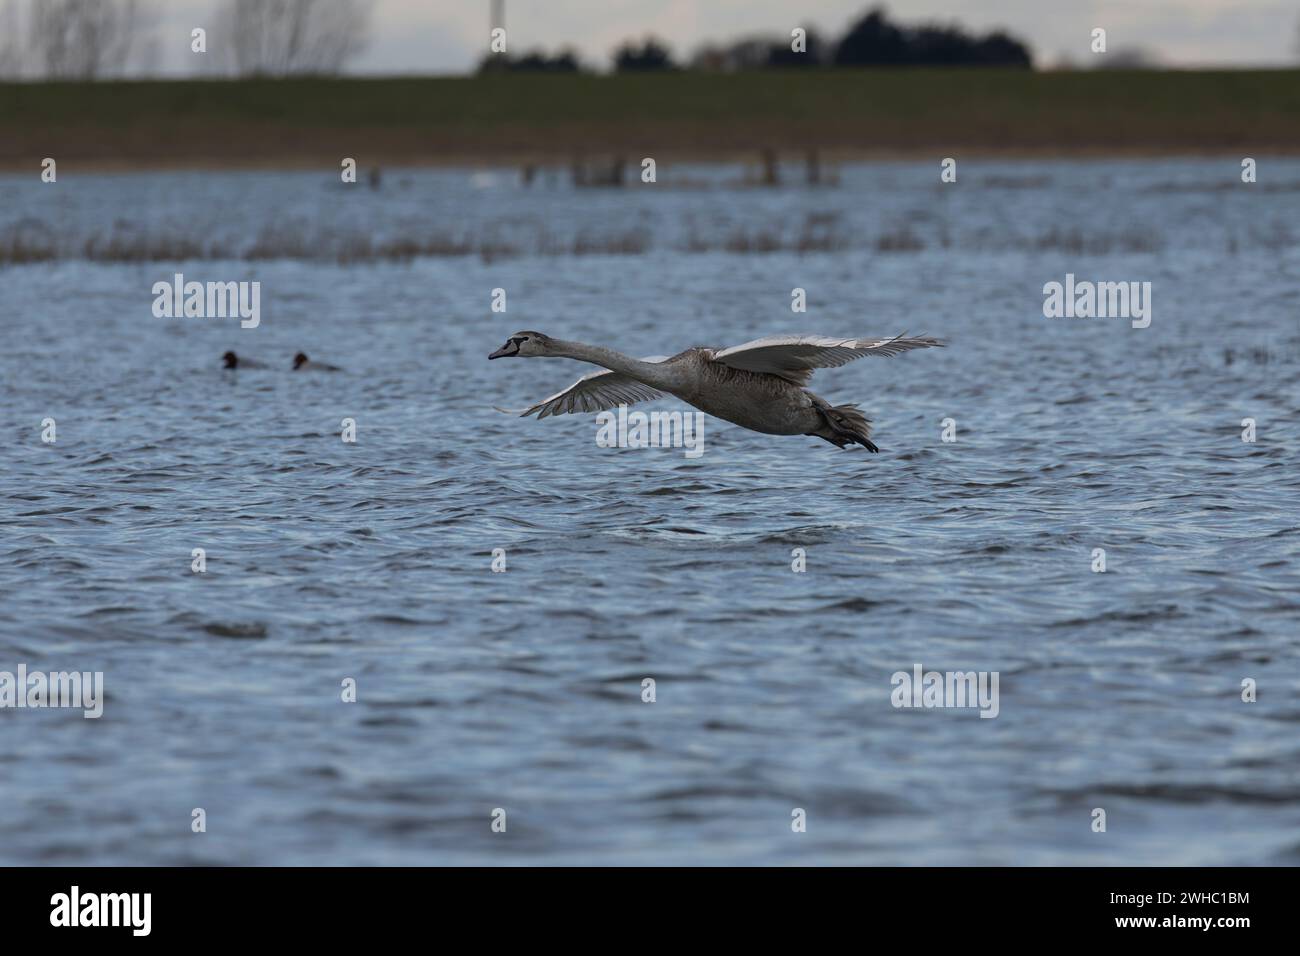 Whooper swan cygnet in flight over water Stock Photo